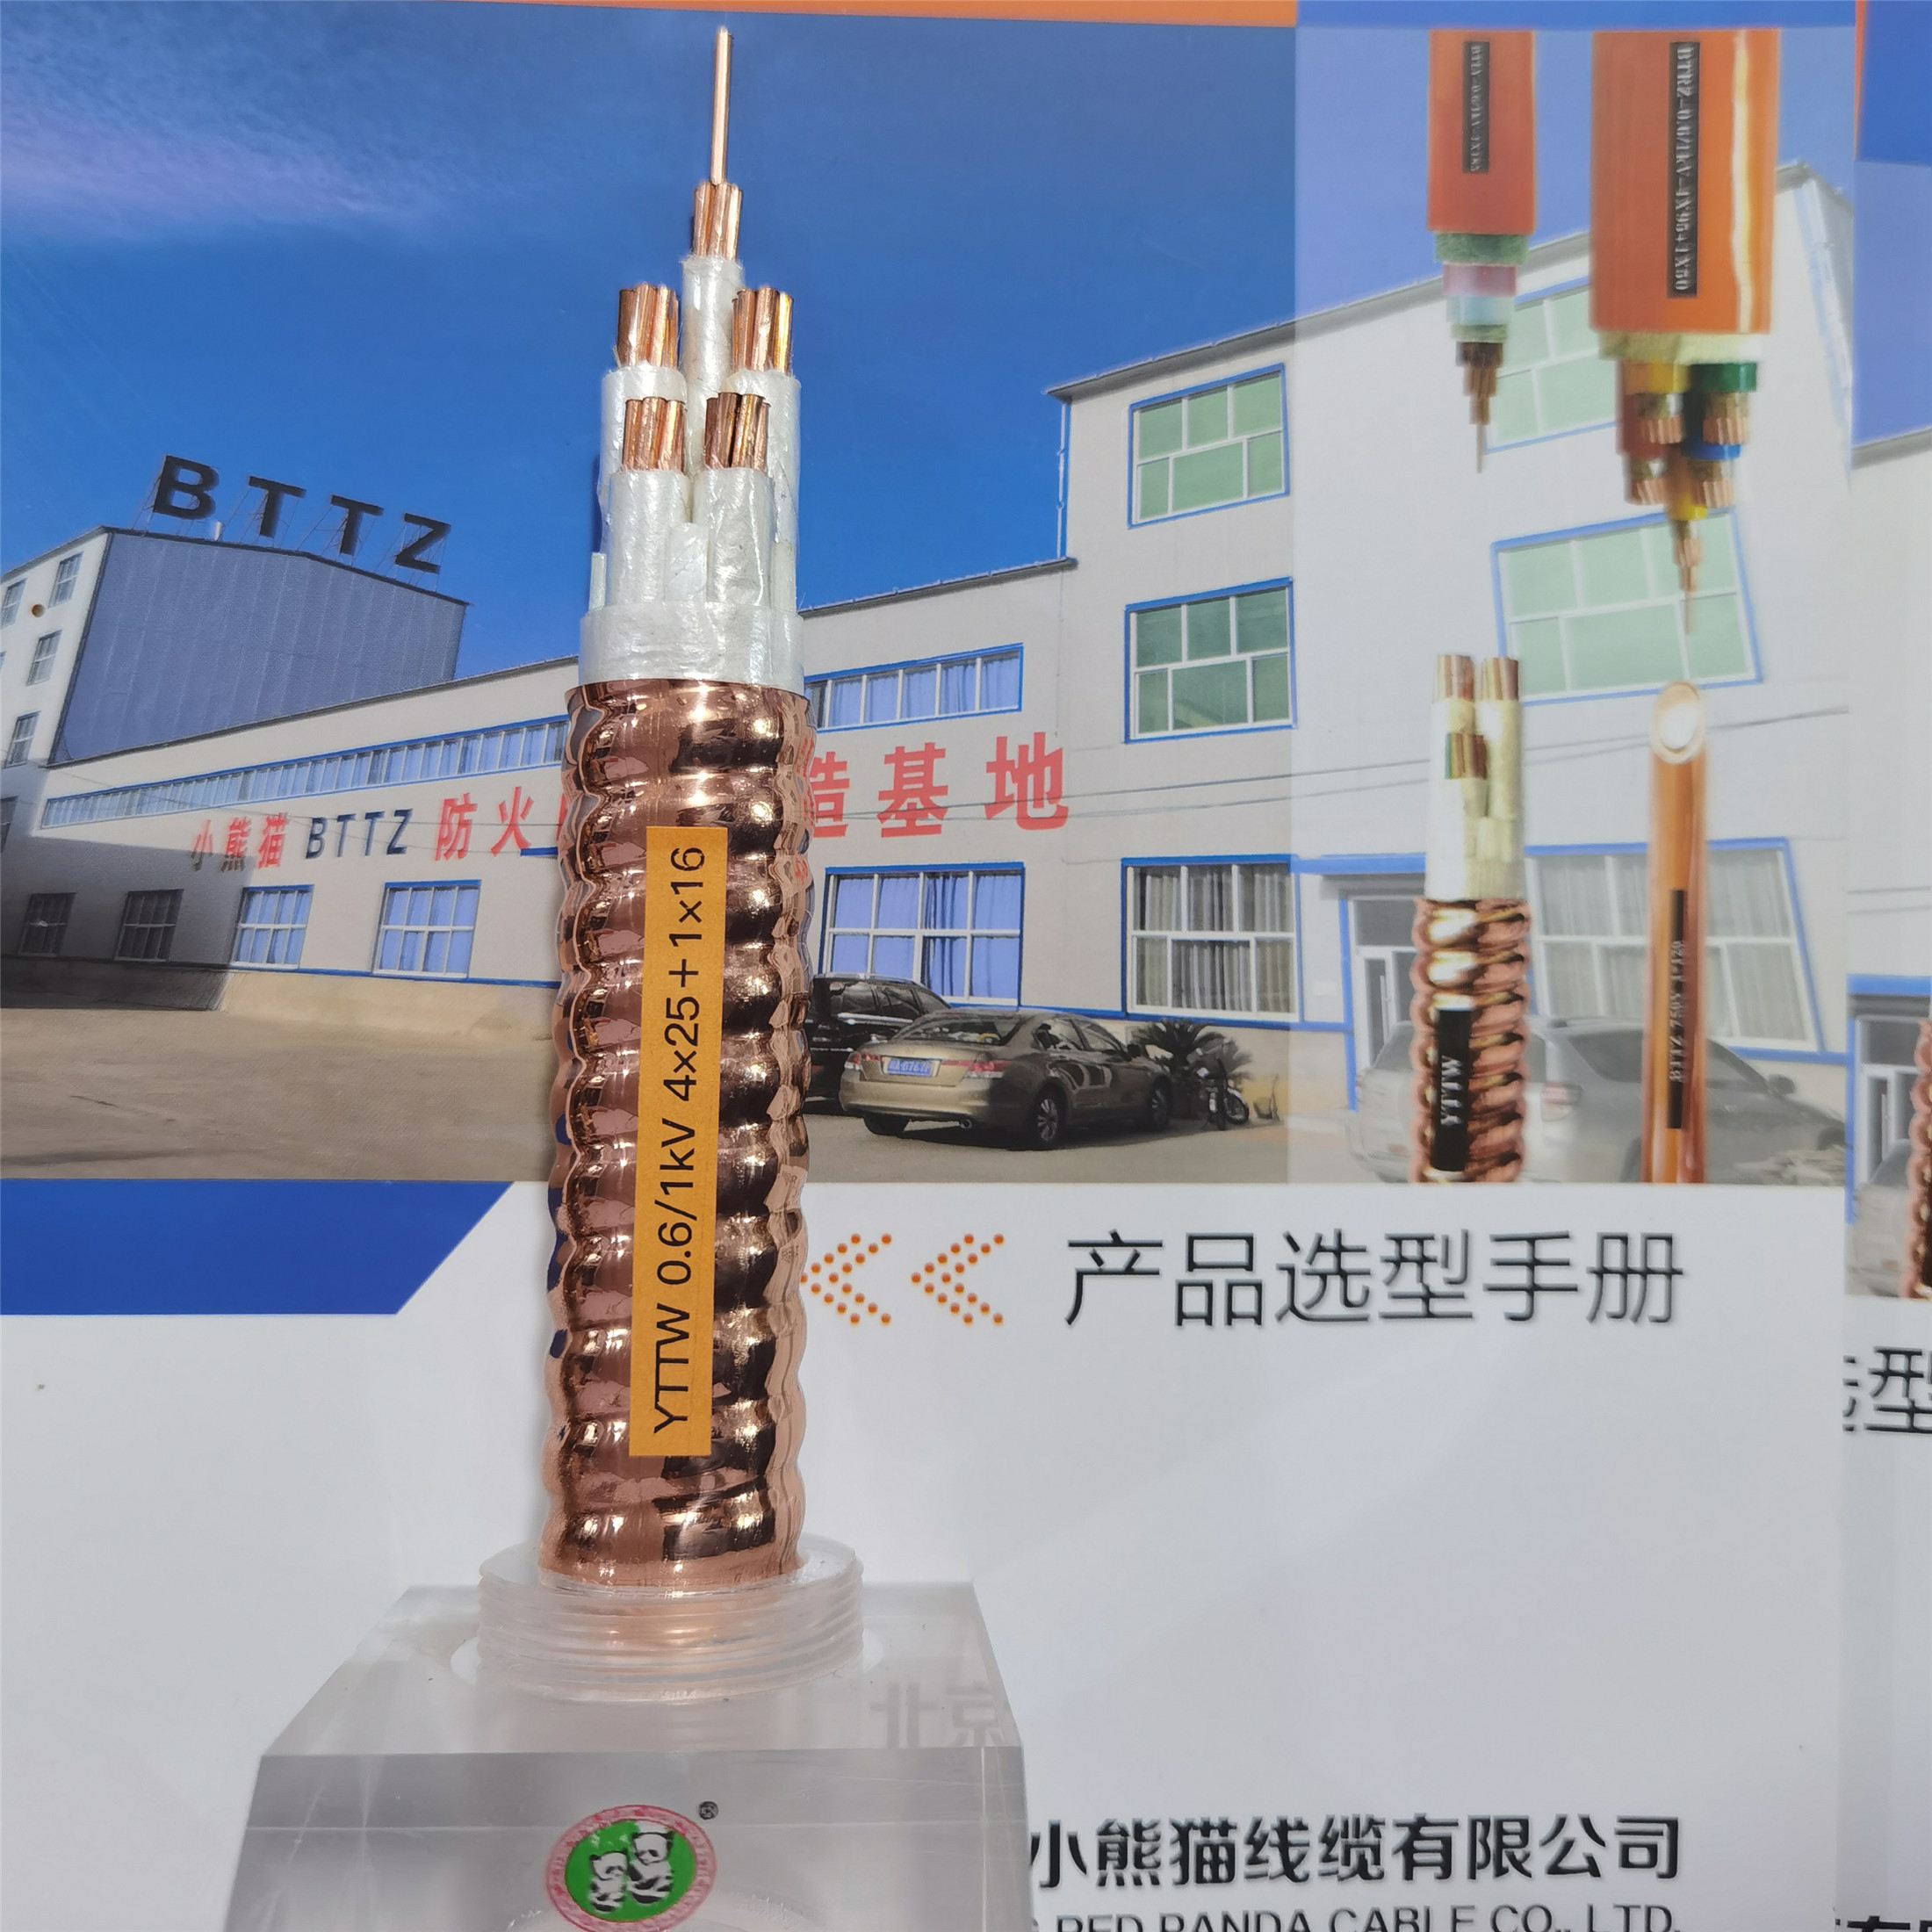 YTTWY，NG-A  ,BTLY廠家RTTZ  BTTZ  BBTRZ   BTTRZ倉儲批發礦物質防火電纜